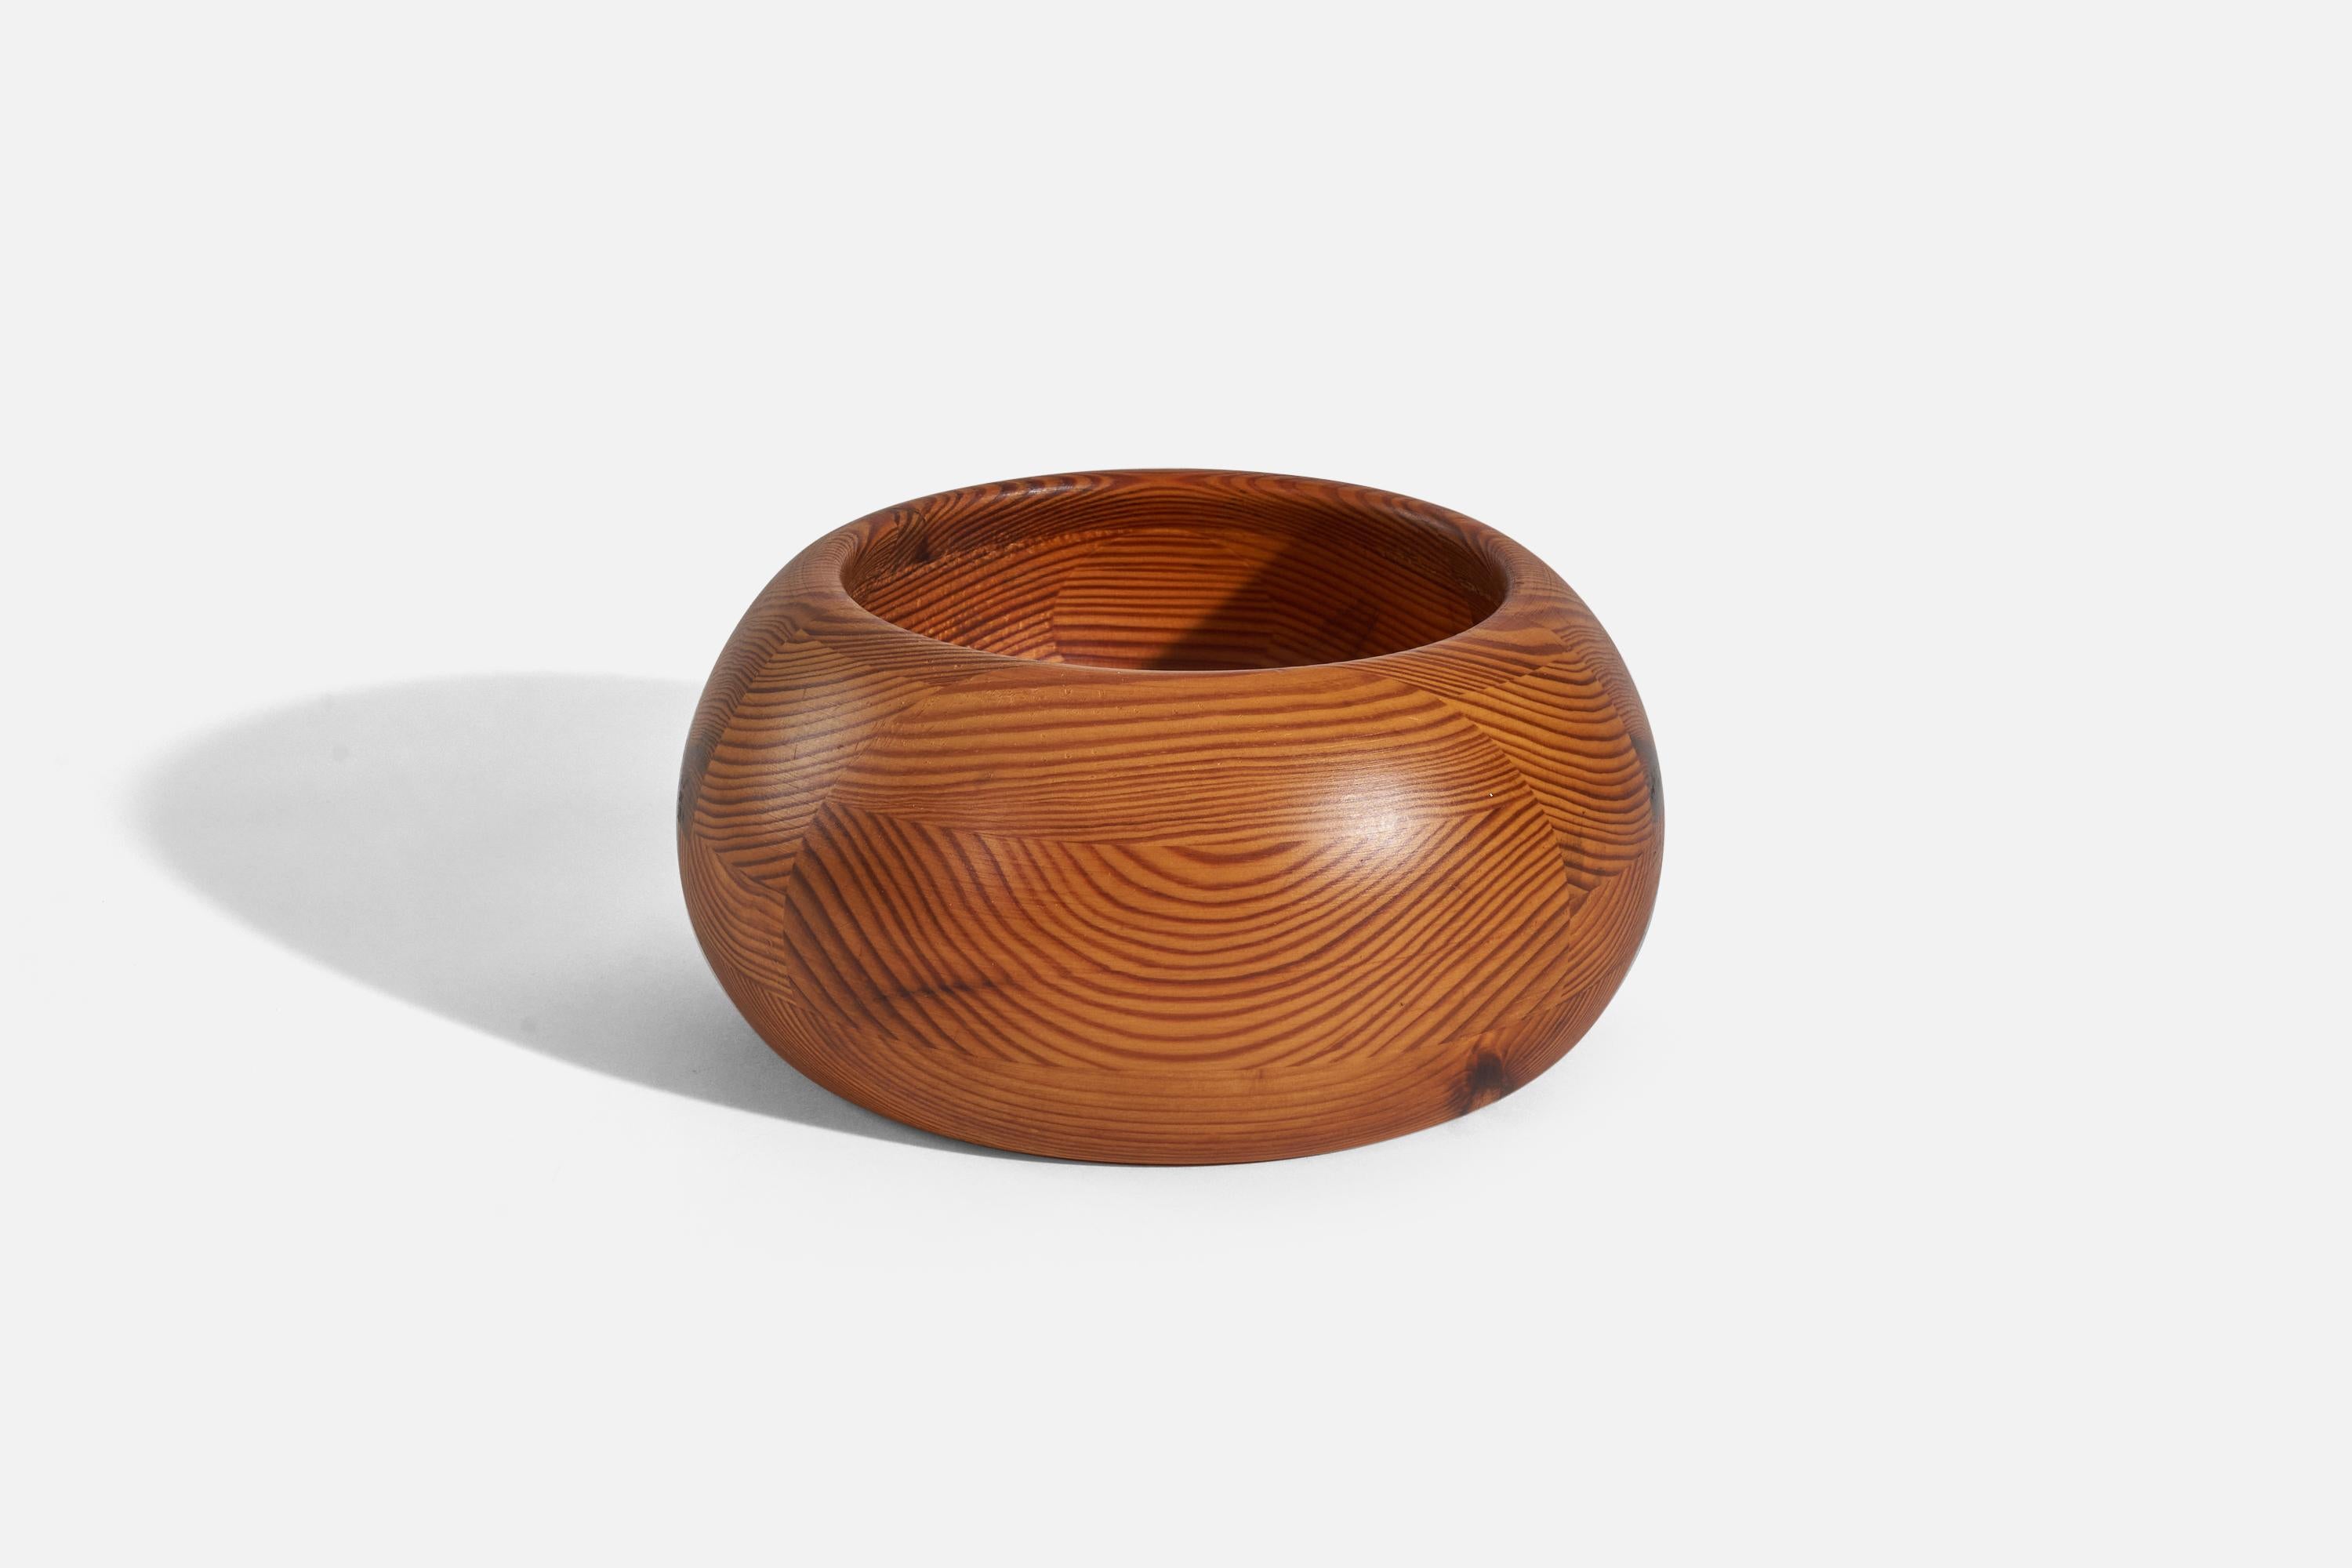 A solid pine bowl designed by Stig Johnsson and produced by his firm Smålandsslöjd, Värnamo, Sweden, 1970s.